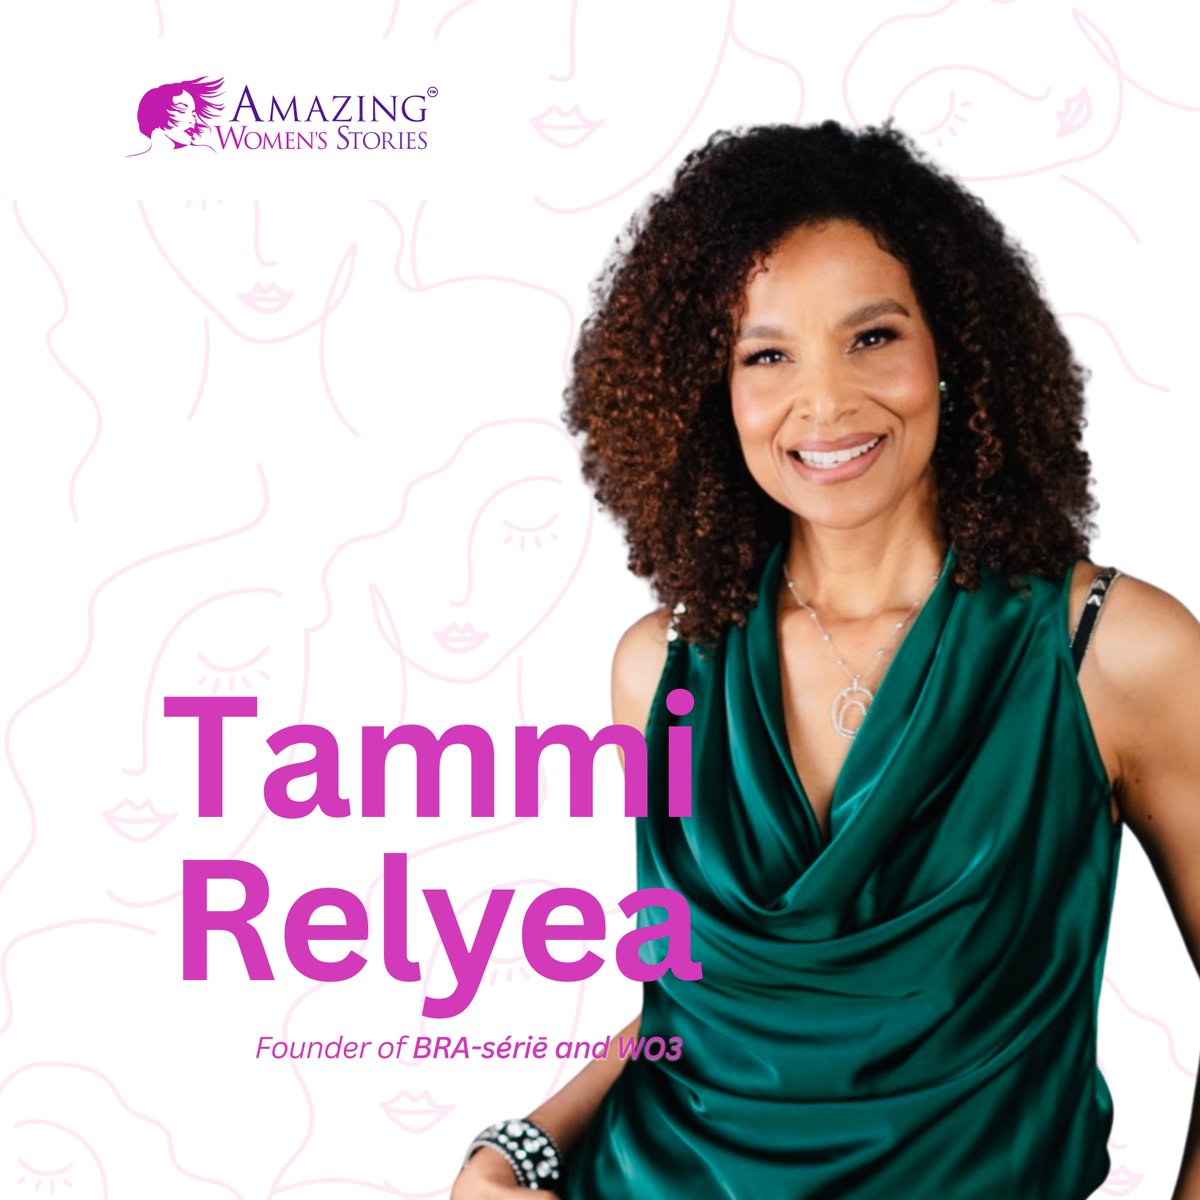 If you want to know more about Tammi Relyea, visit www.amazingws.com

#inspirationalwomen #womenempowerment #womeninbusiness #womenleaders #womenwhochallenge #womeninhealthcare #womeninbeauty #strongwomen #femaleentrepreneurs #girlboss #womenrock #womeninspiringwomen